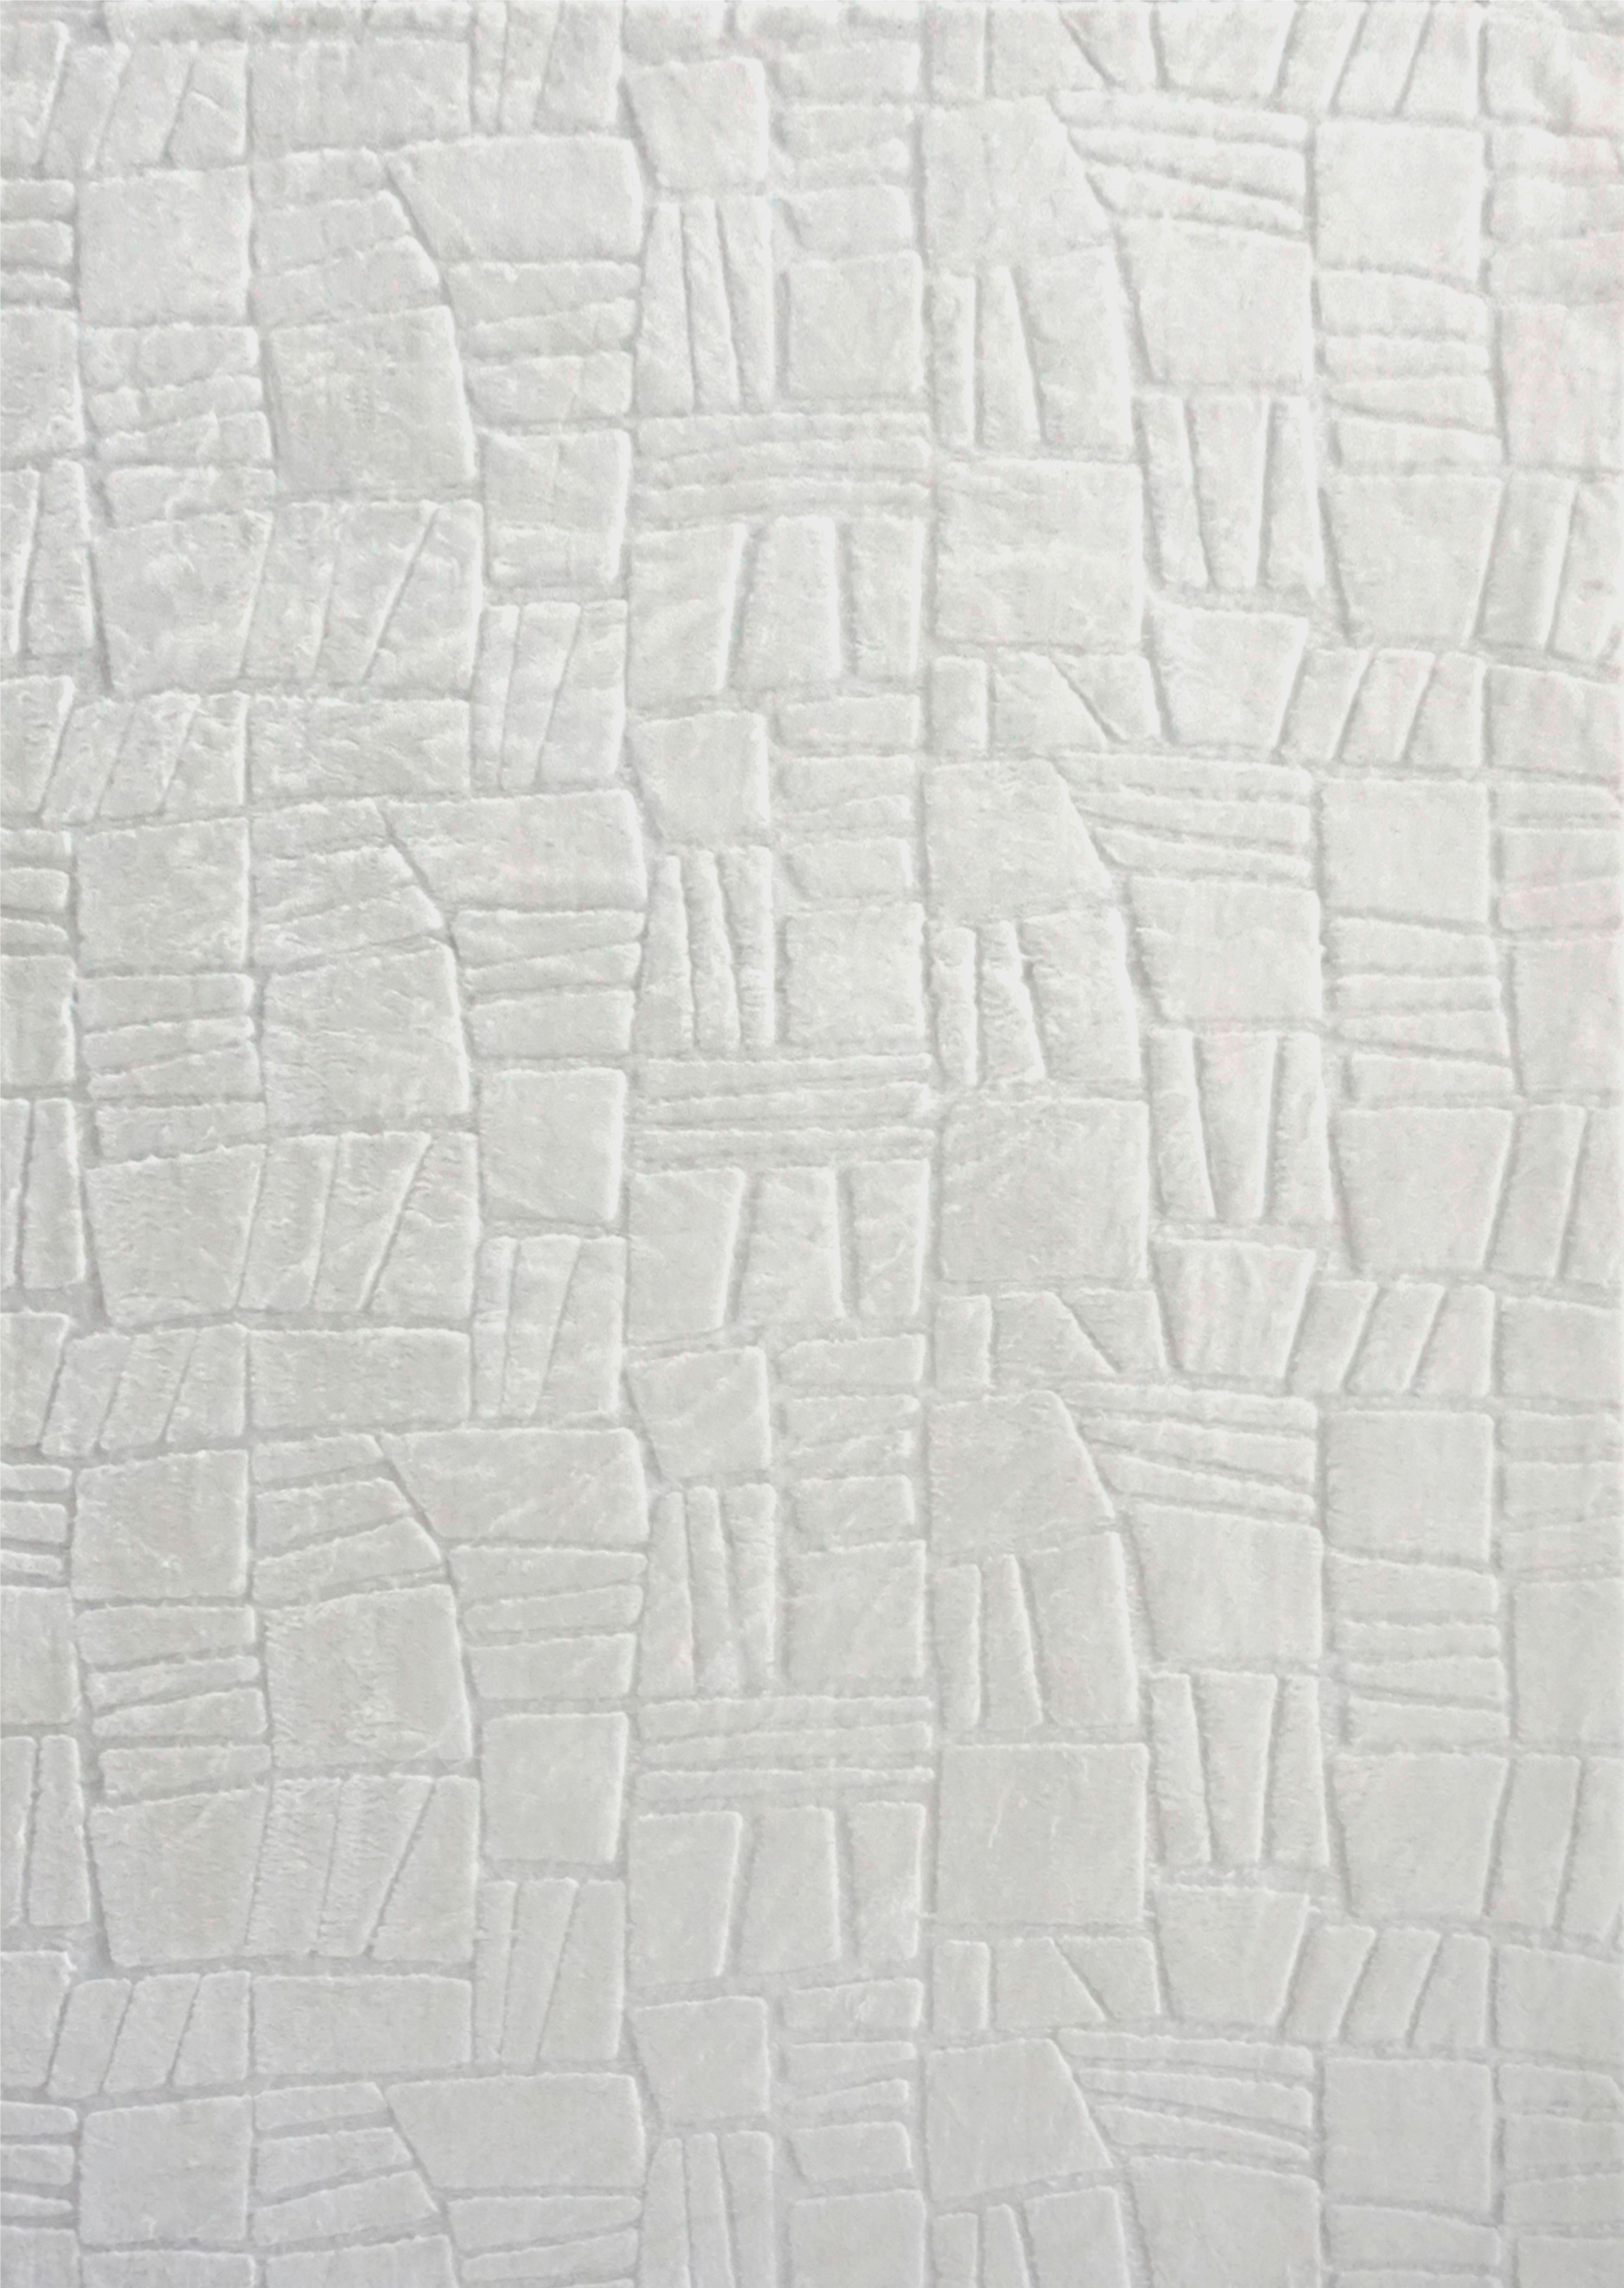 VÄVD MATTA Gloria  - vit/beige, Trend, textil (140/200cm) - Novel